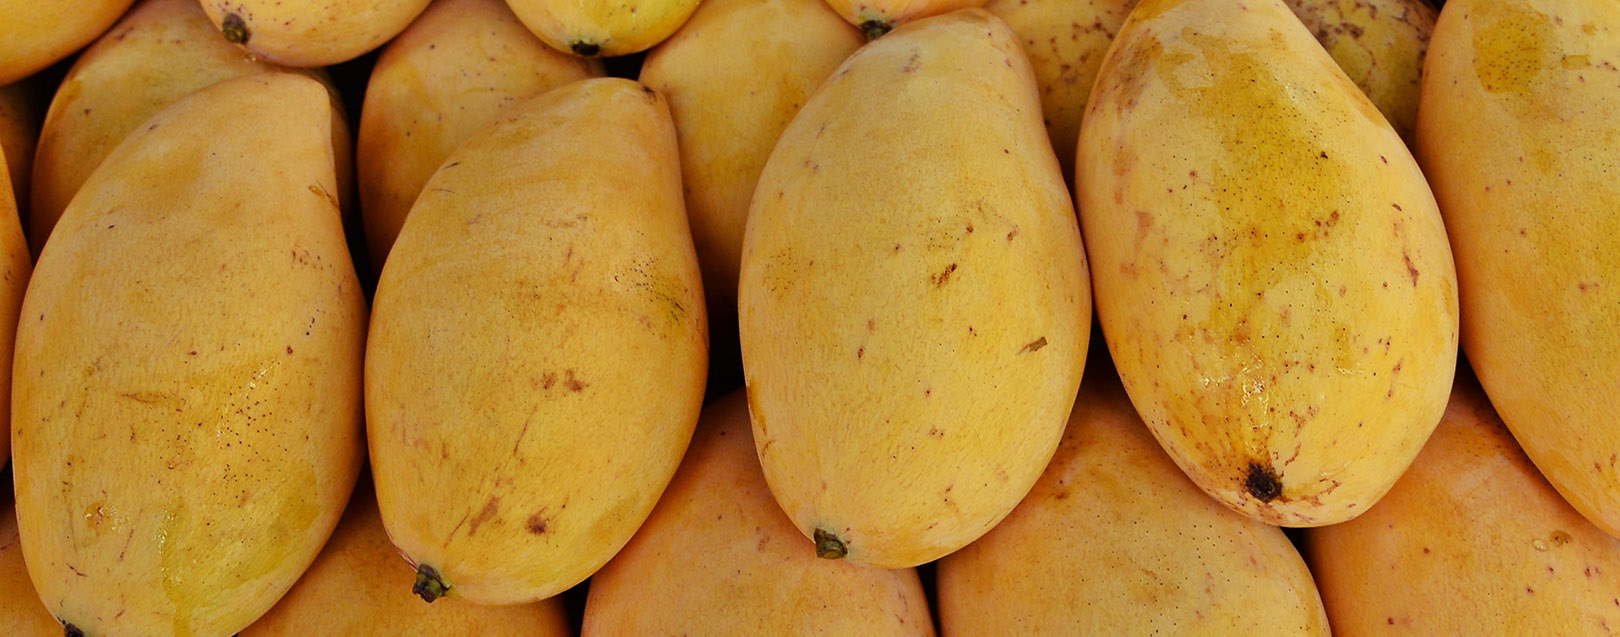 Innova Agri Bio Park exports 1.2 tonnes fruits to US